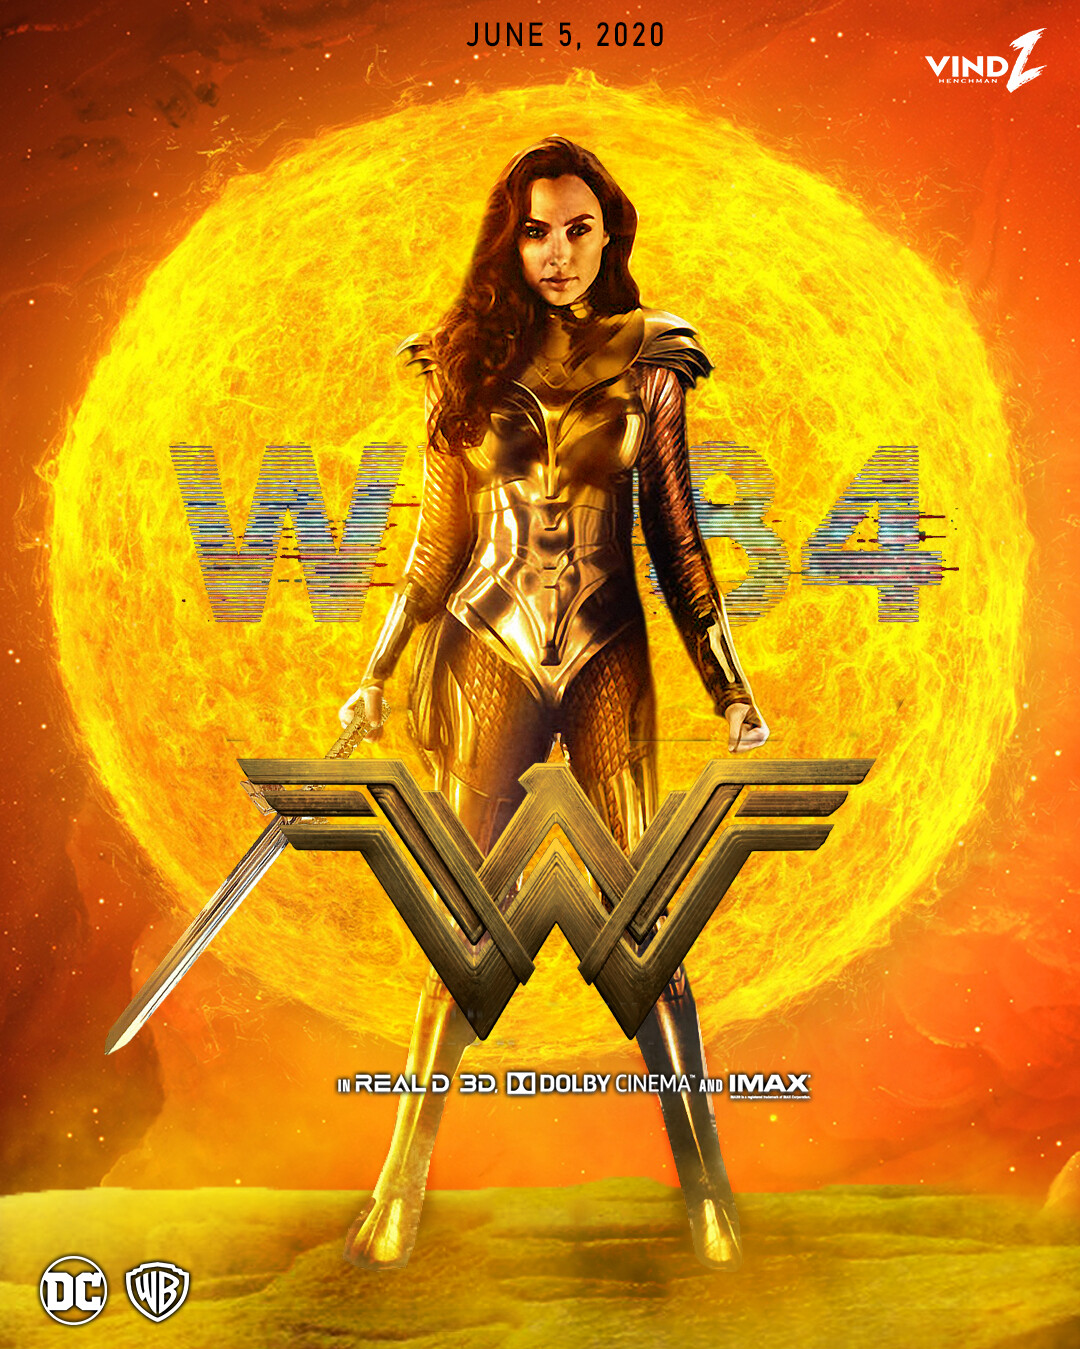 Wonder Woman 1984 - Dolby